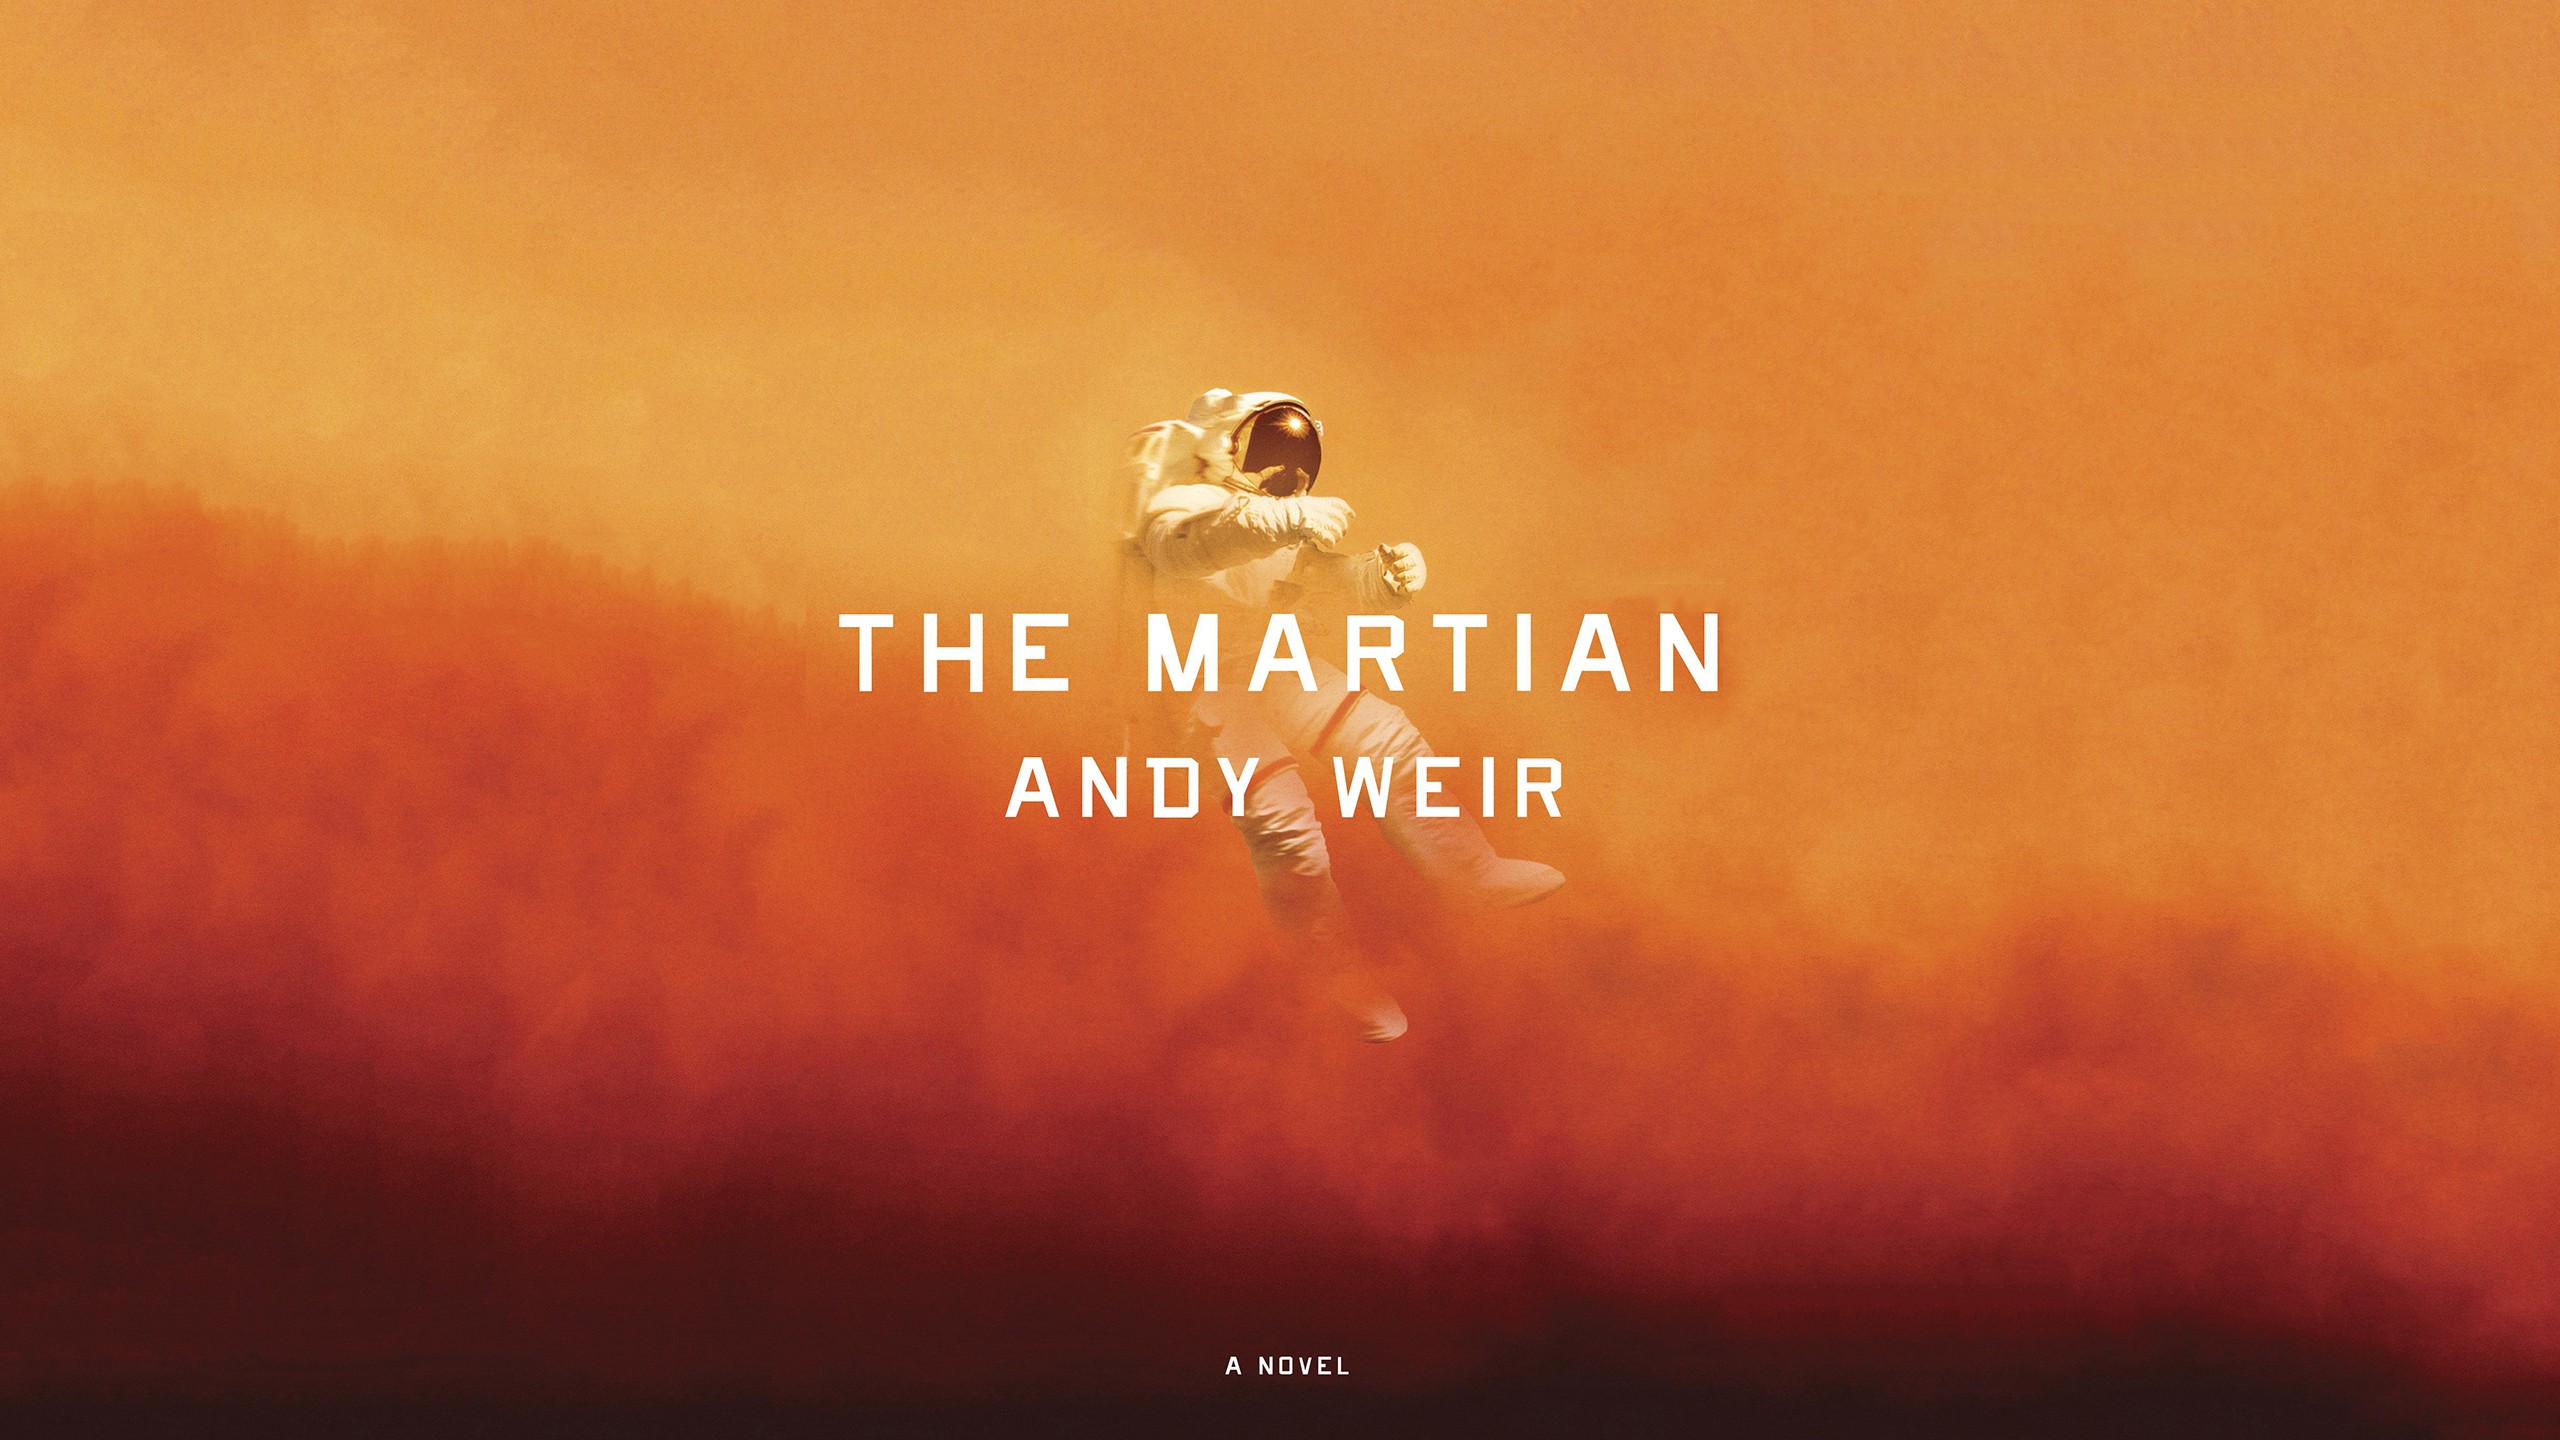 General 2560x1440 artwork The Martian astronaut book cover digital art